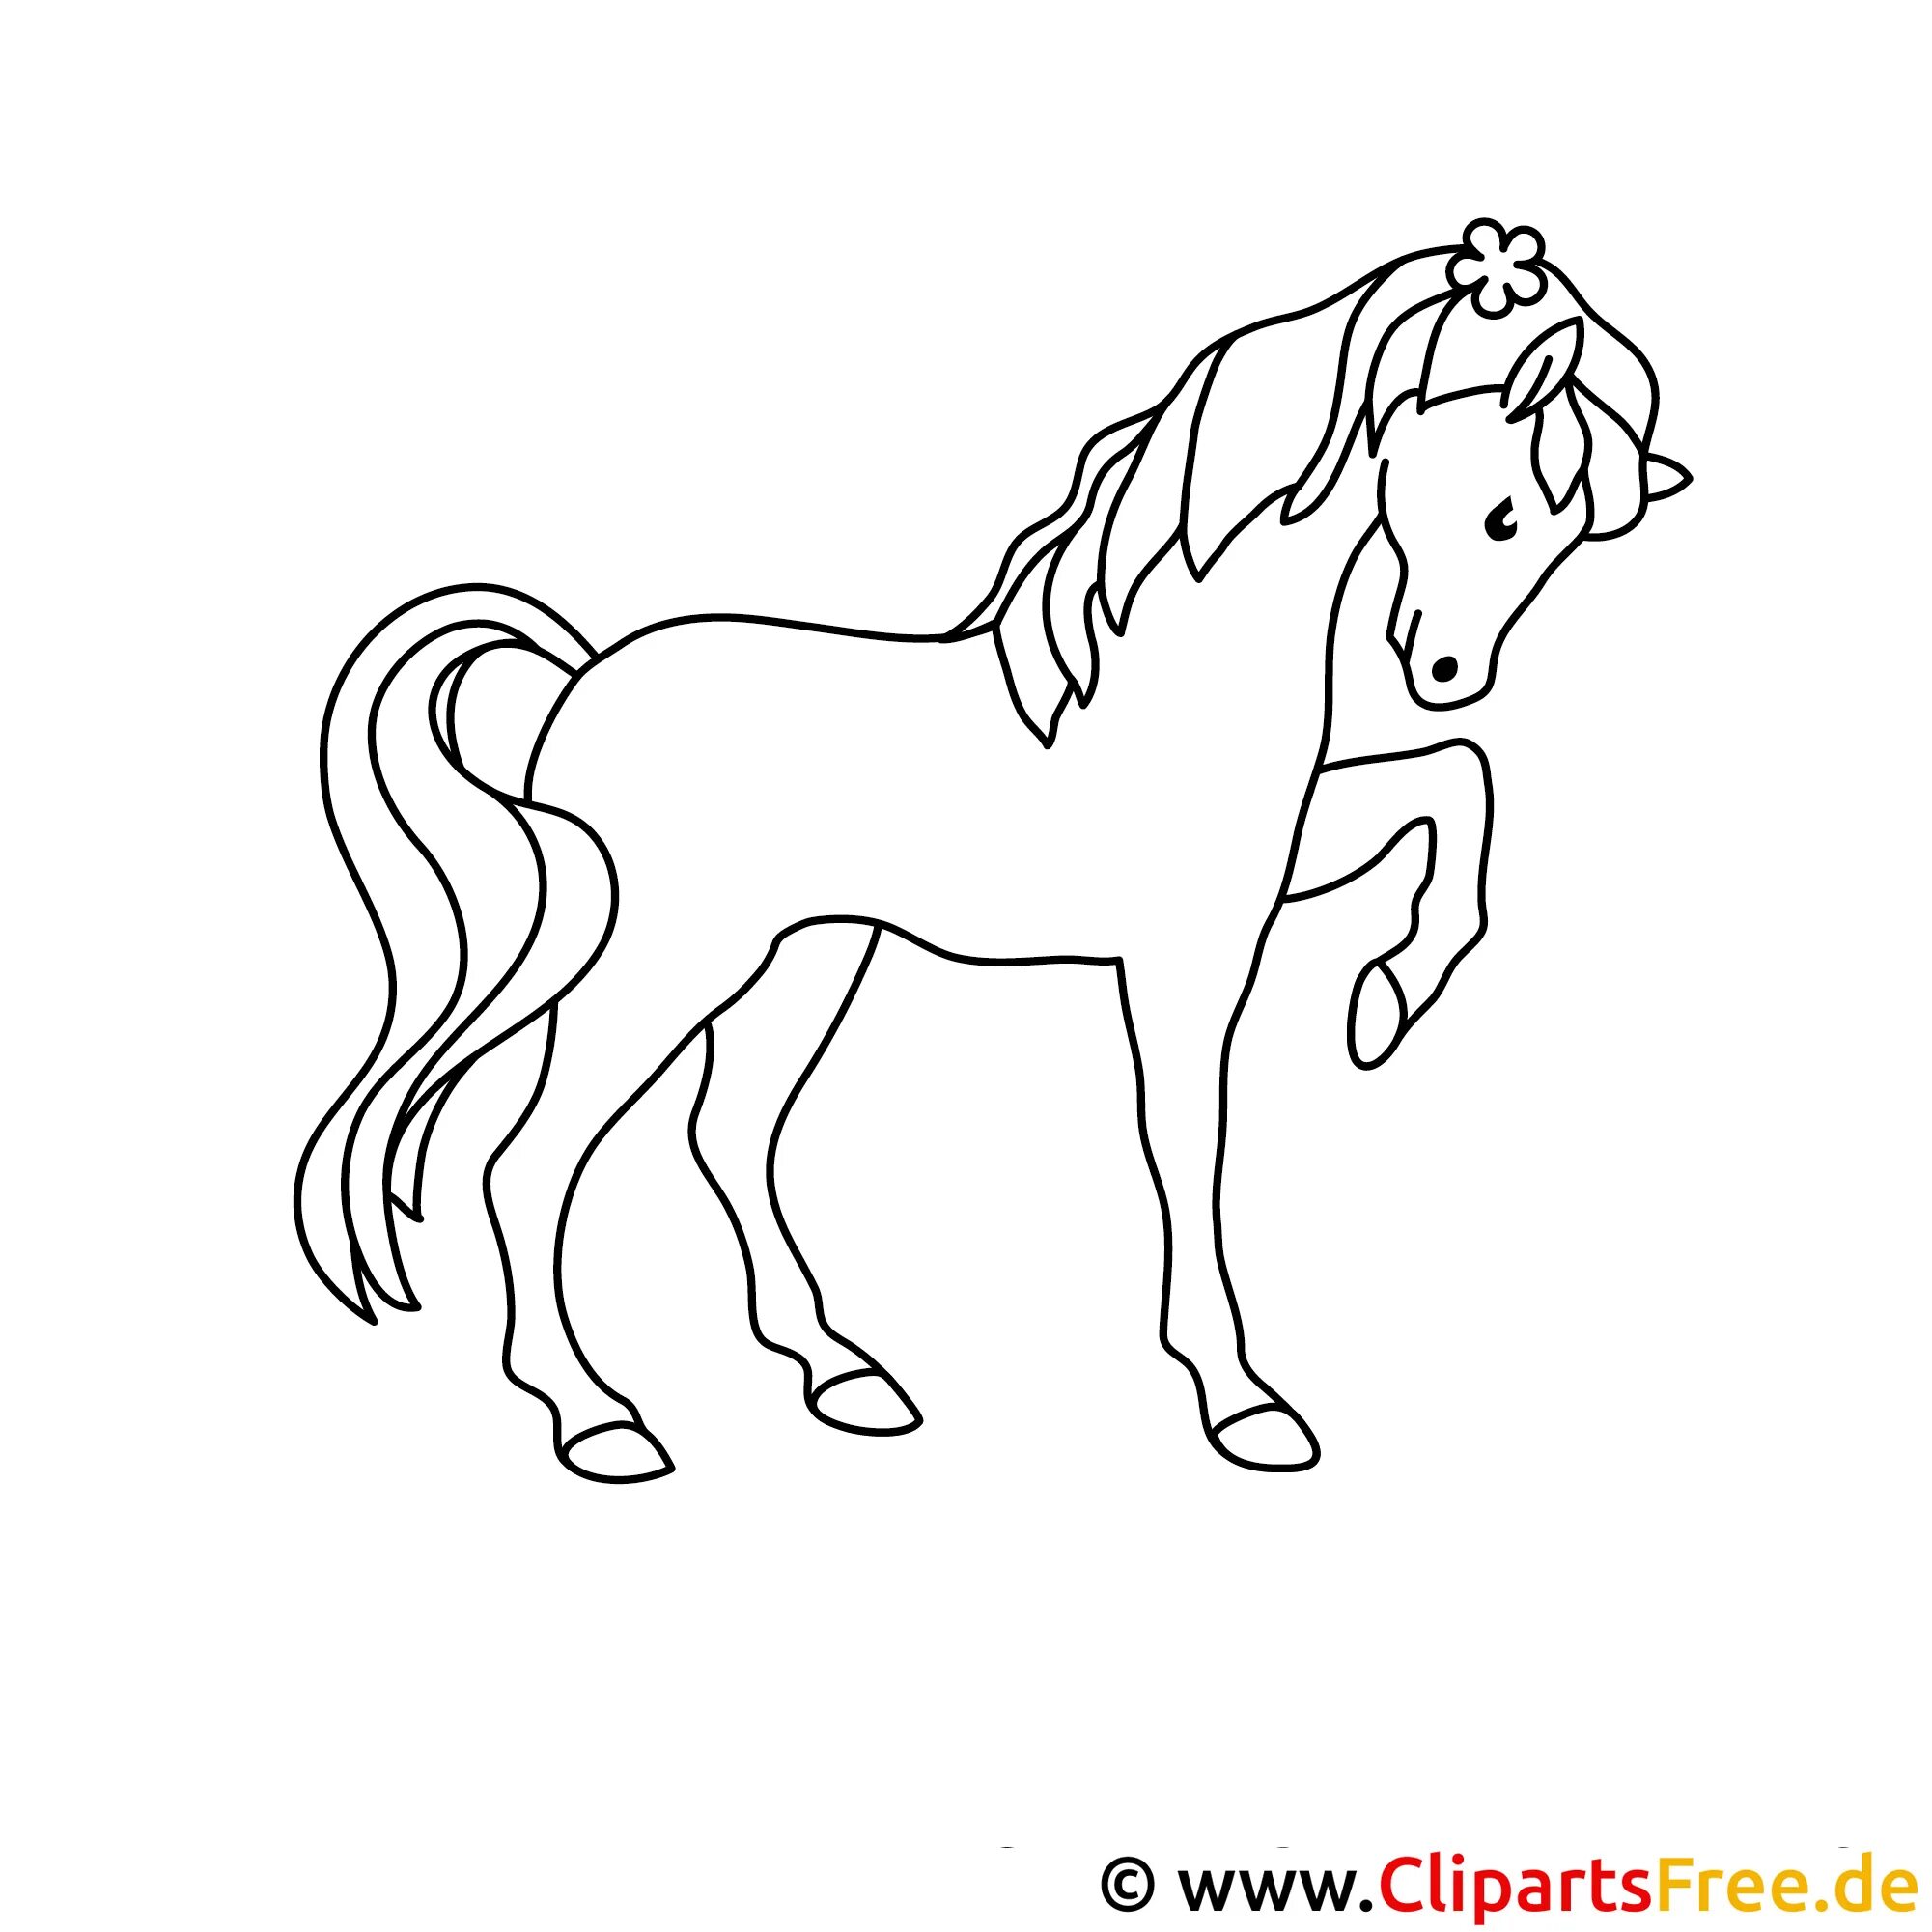 Раскраска. Лошади. Лошадка раскраска для детей. Раскраски лошадки для девочек. Лошадь раскраска для детей.